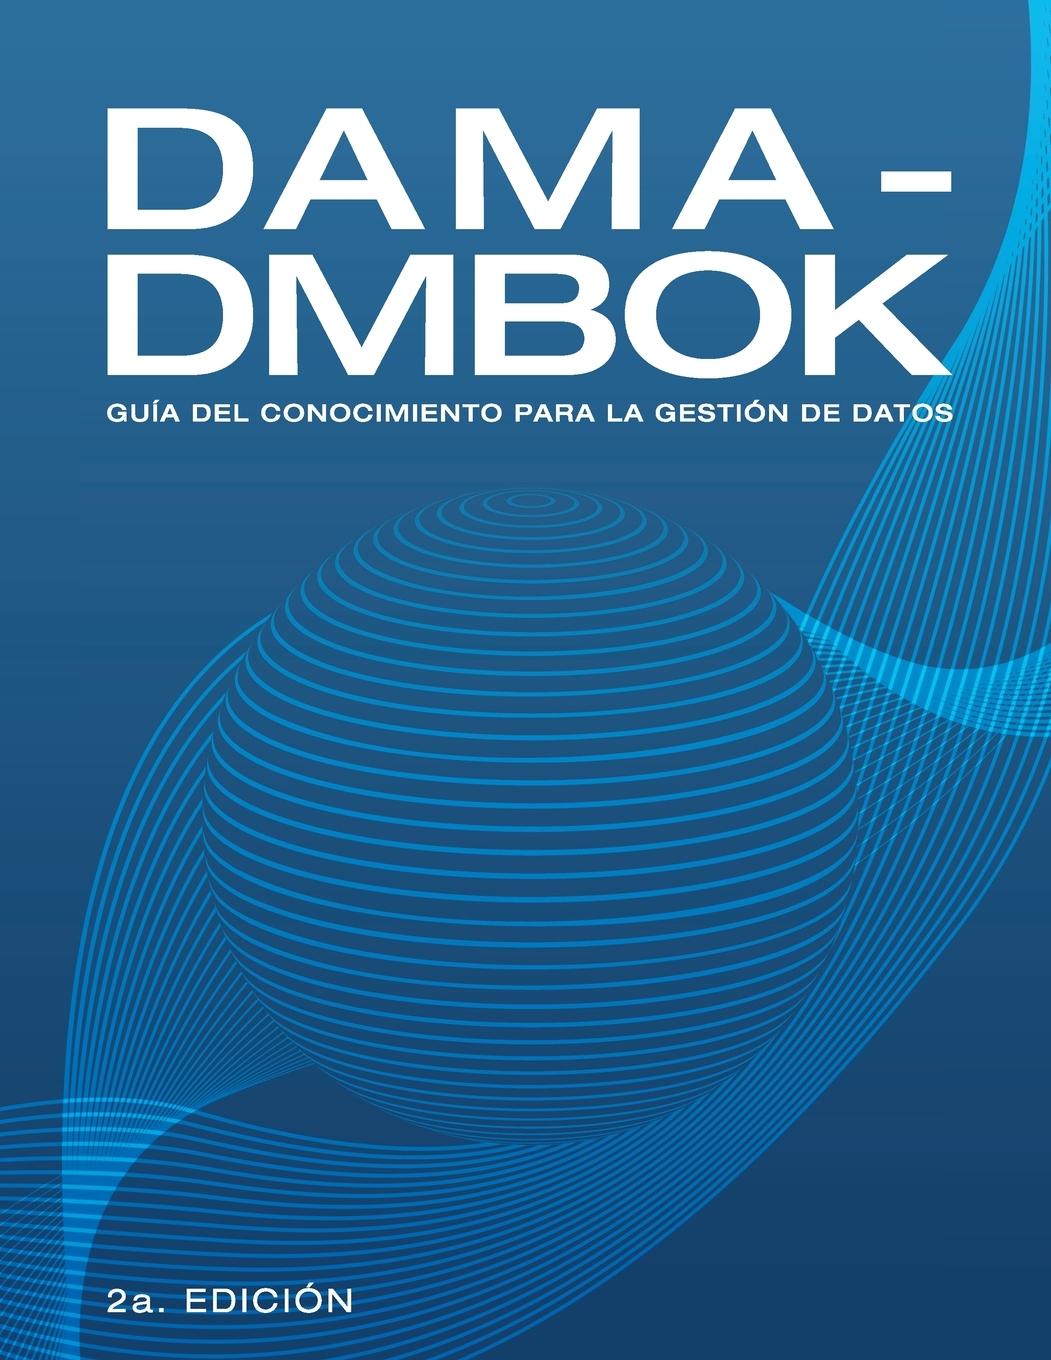 Book DAMA-DMBOK International DAMA International